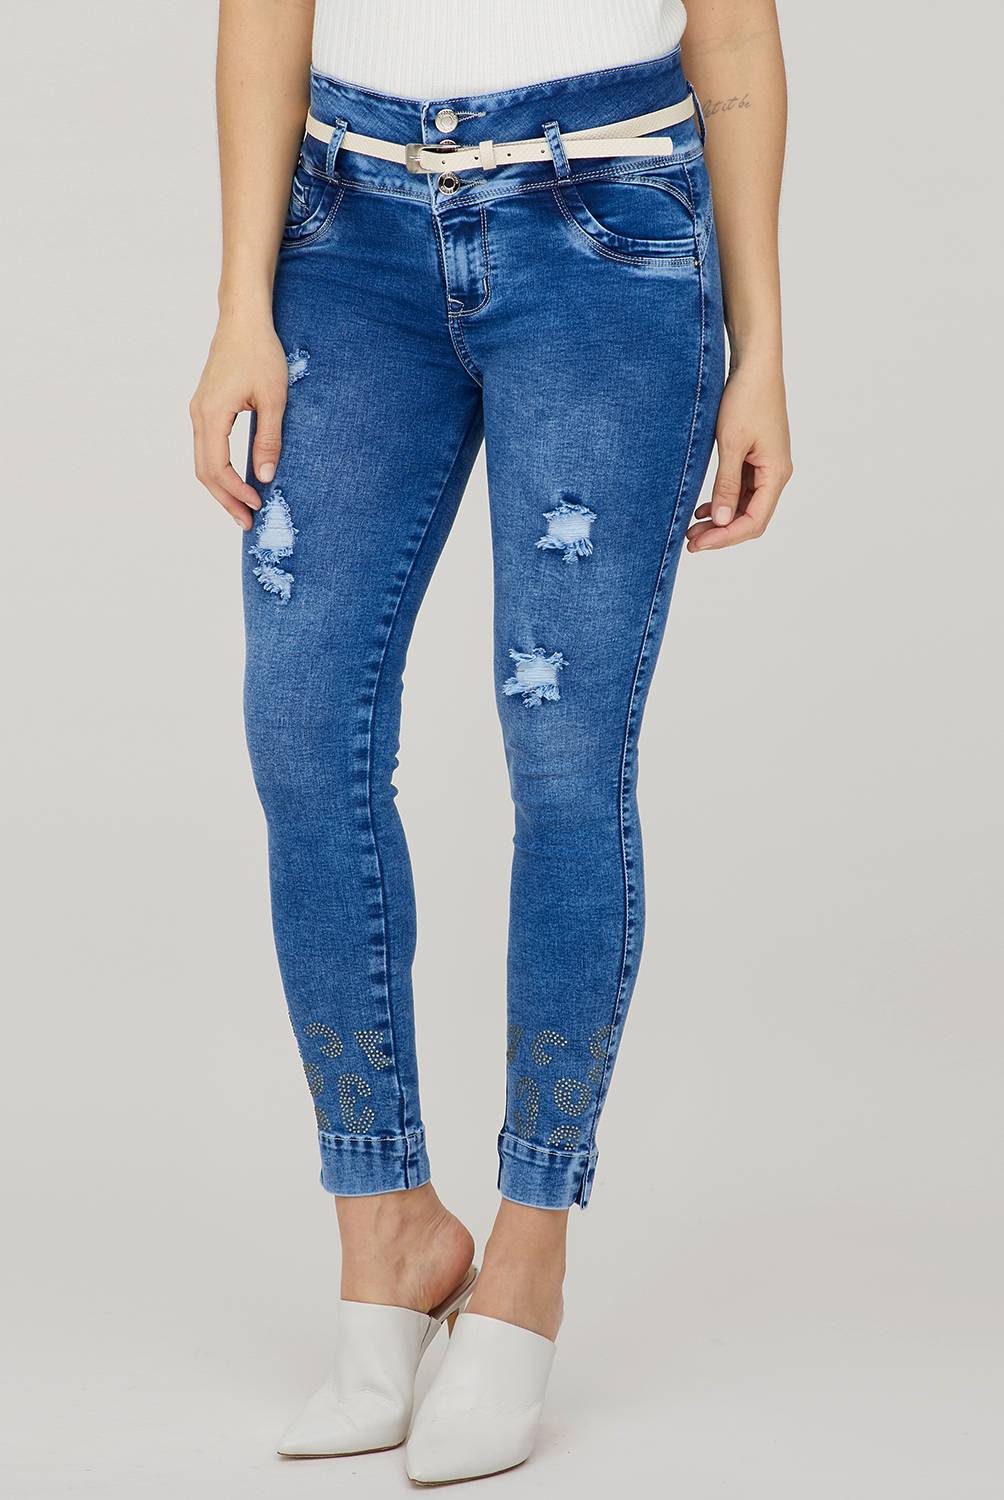 MOSSIMO - Jeans Skinny Tiro Alto Mujer